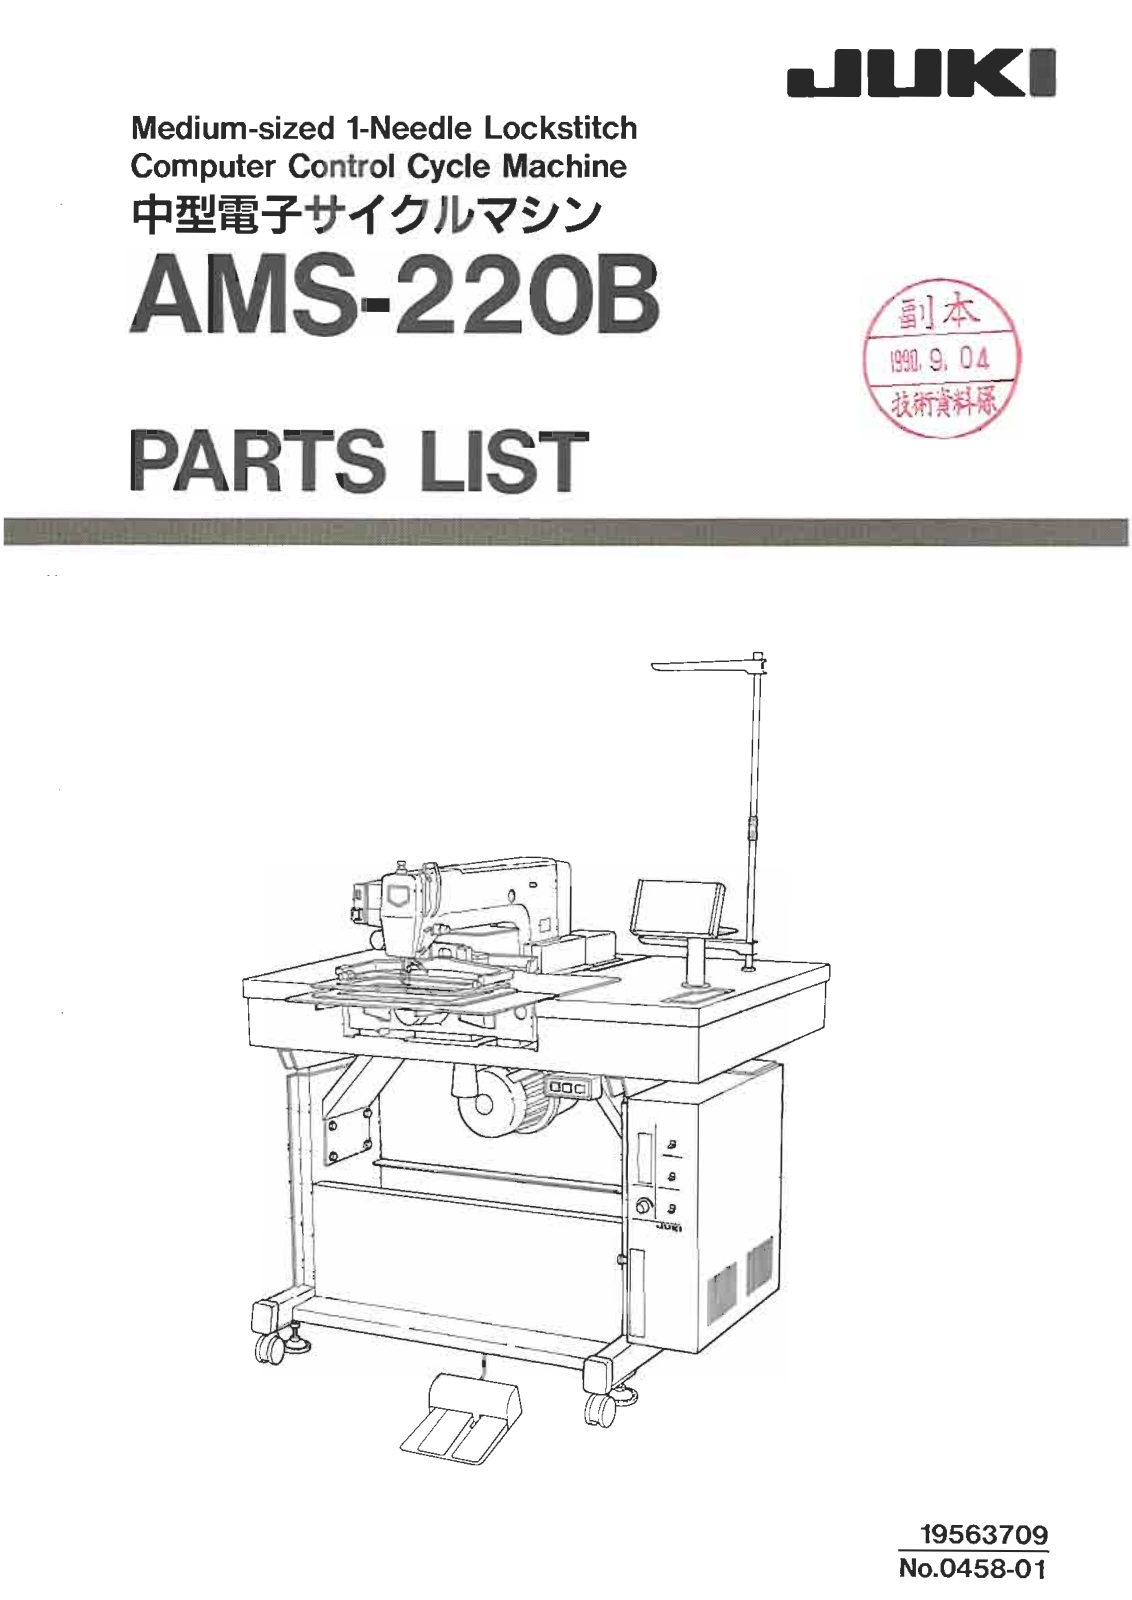 JUKI AMS-220B Parts List